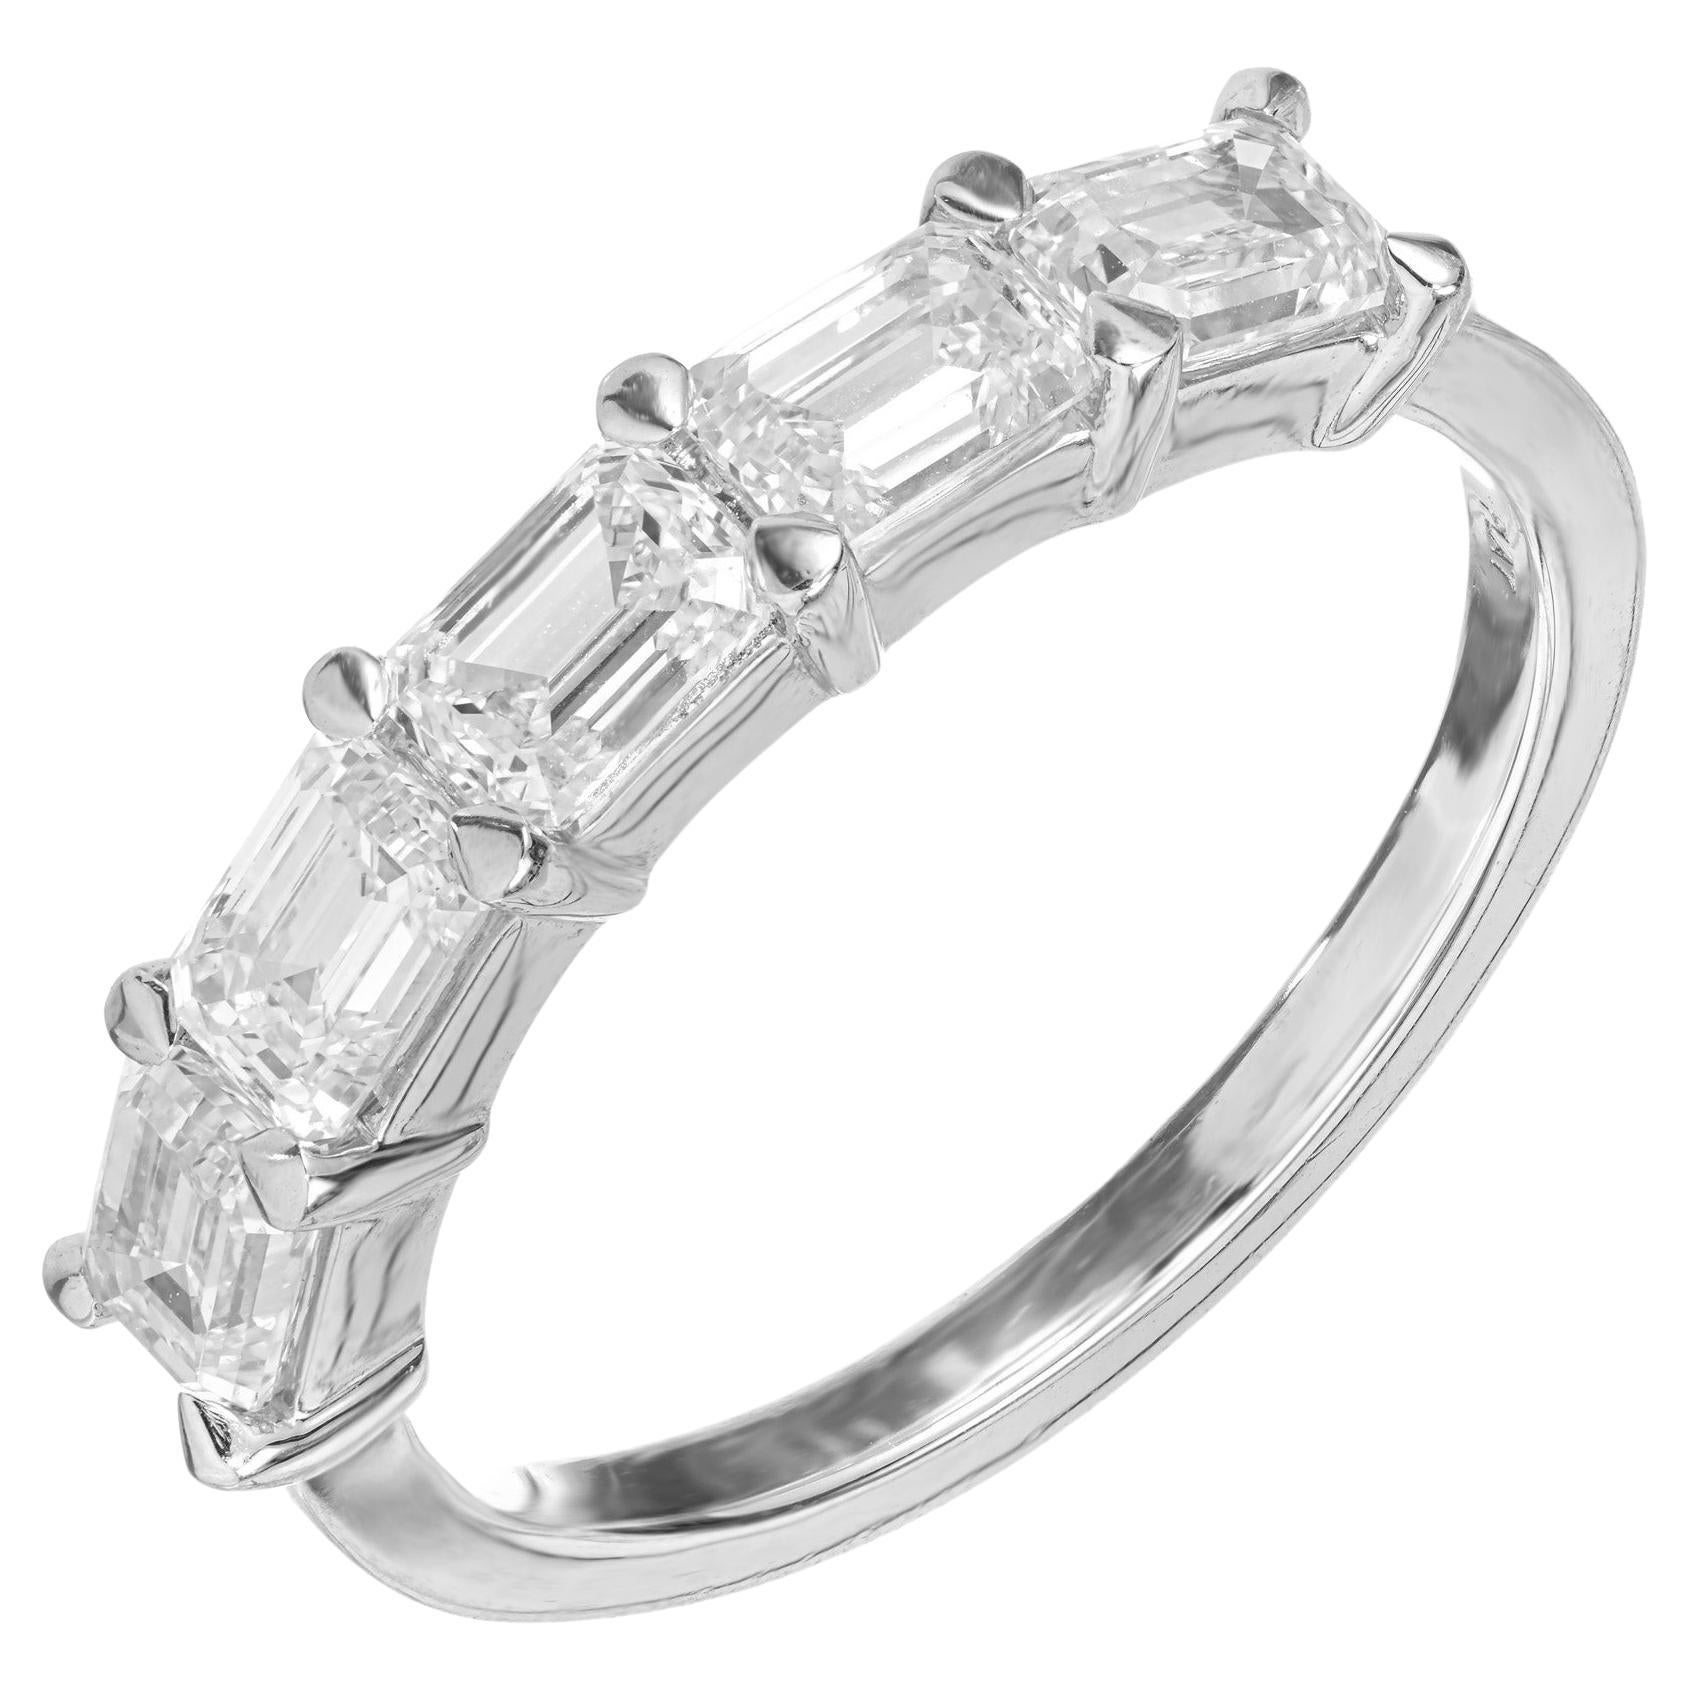 Peter Suchy 1.55 Carat Emerald Cut Diamond Platinum Wedding Band Ring For Sale